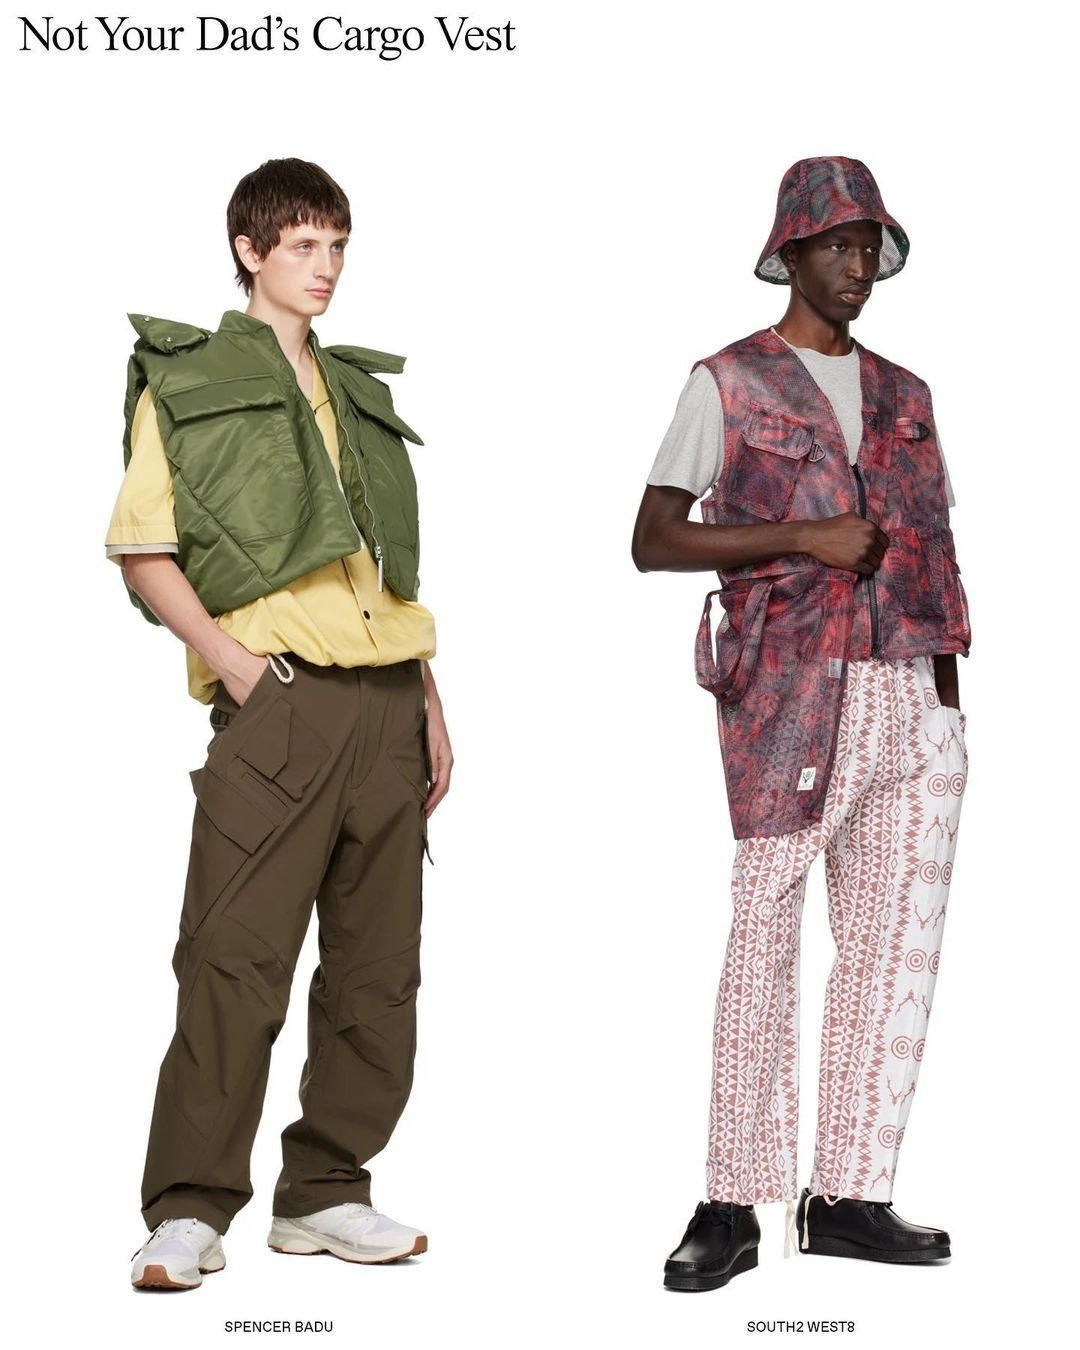 Stylish Ways to Rock Cargo Vests in Your Wardrobe